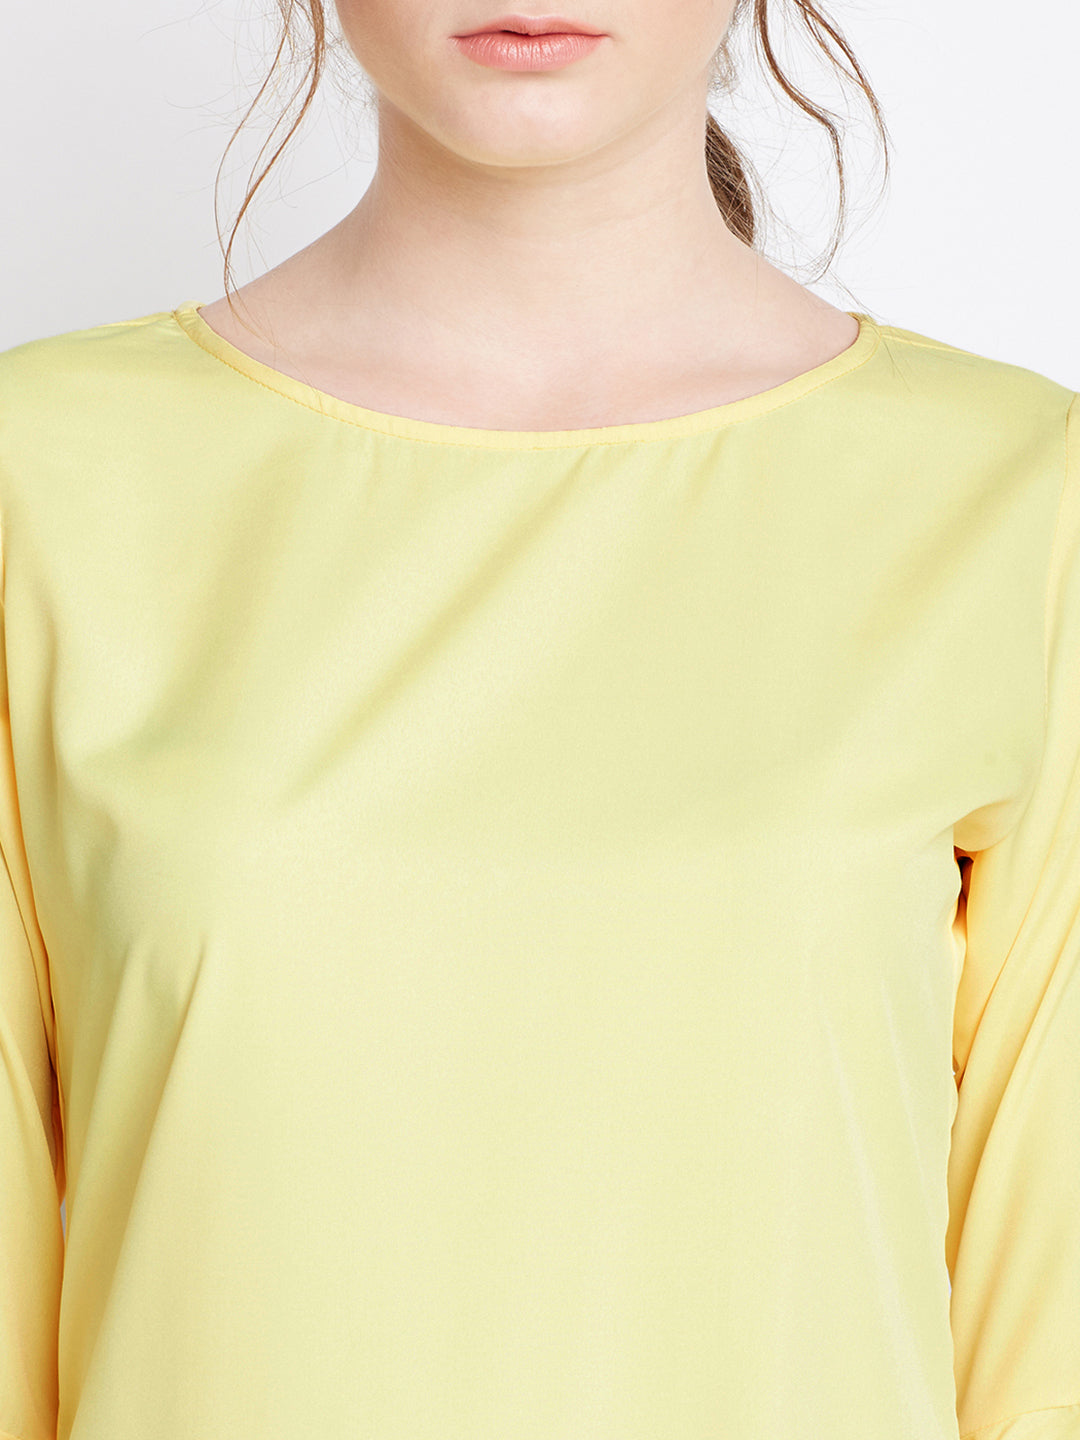 Yellow Solid A-Line Dress - Berrylush